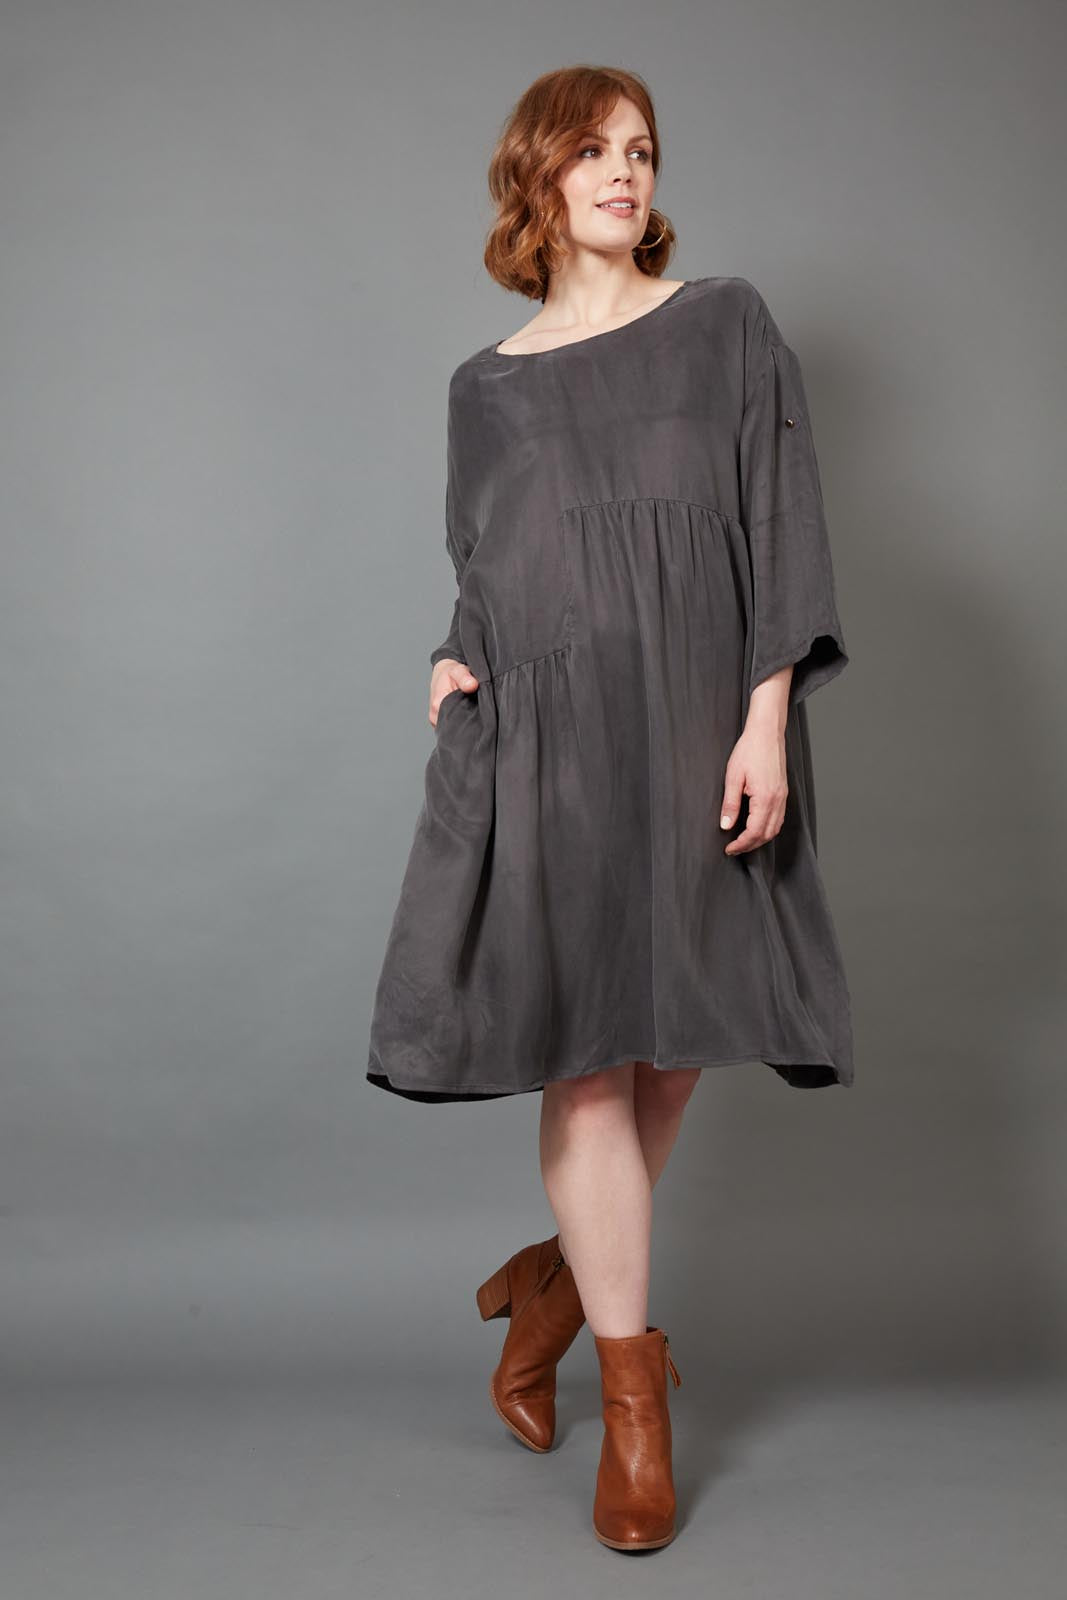 Vienetta Dress - Fossil - eb&ive Clothing - Dress 3/4 Length